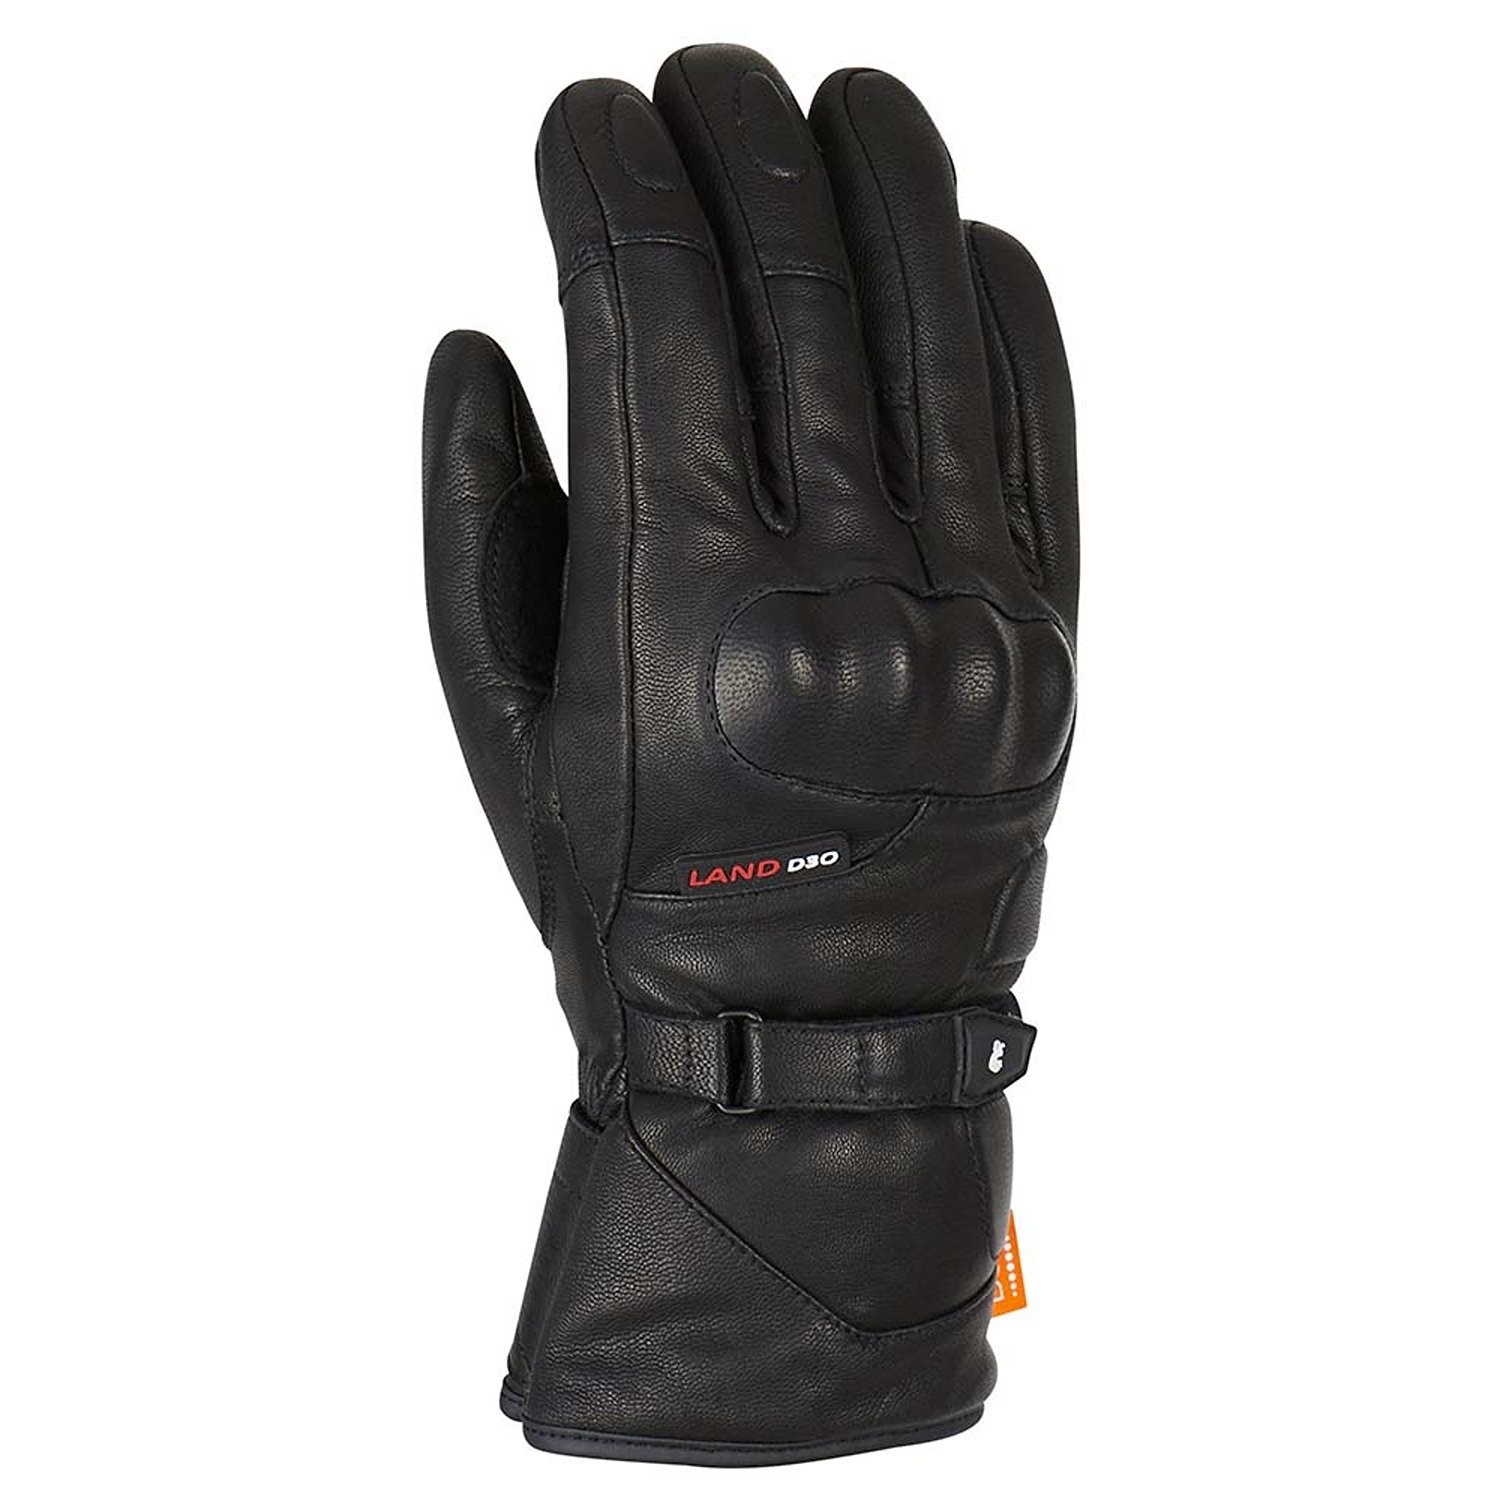 Image of Furygan Land DK D30 Gloves Black Size S ID 3435980358549